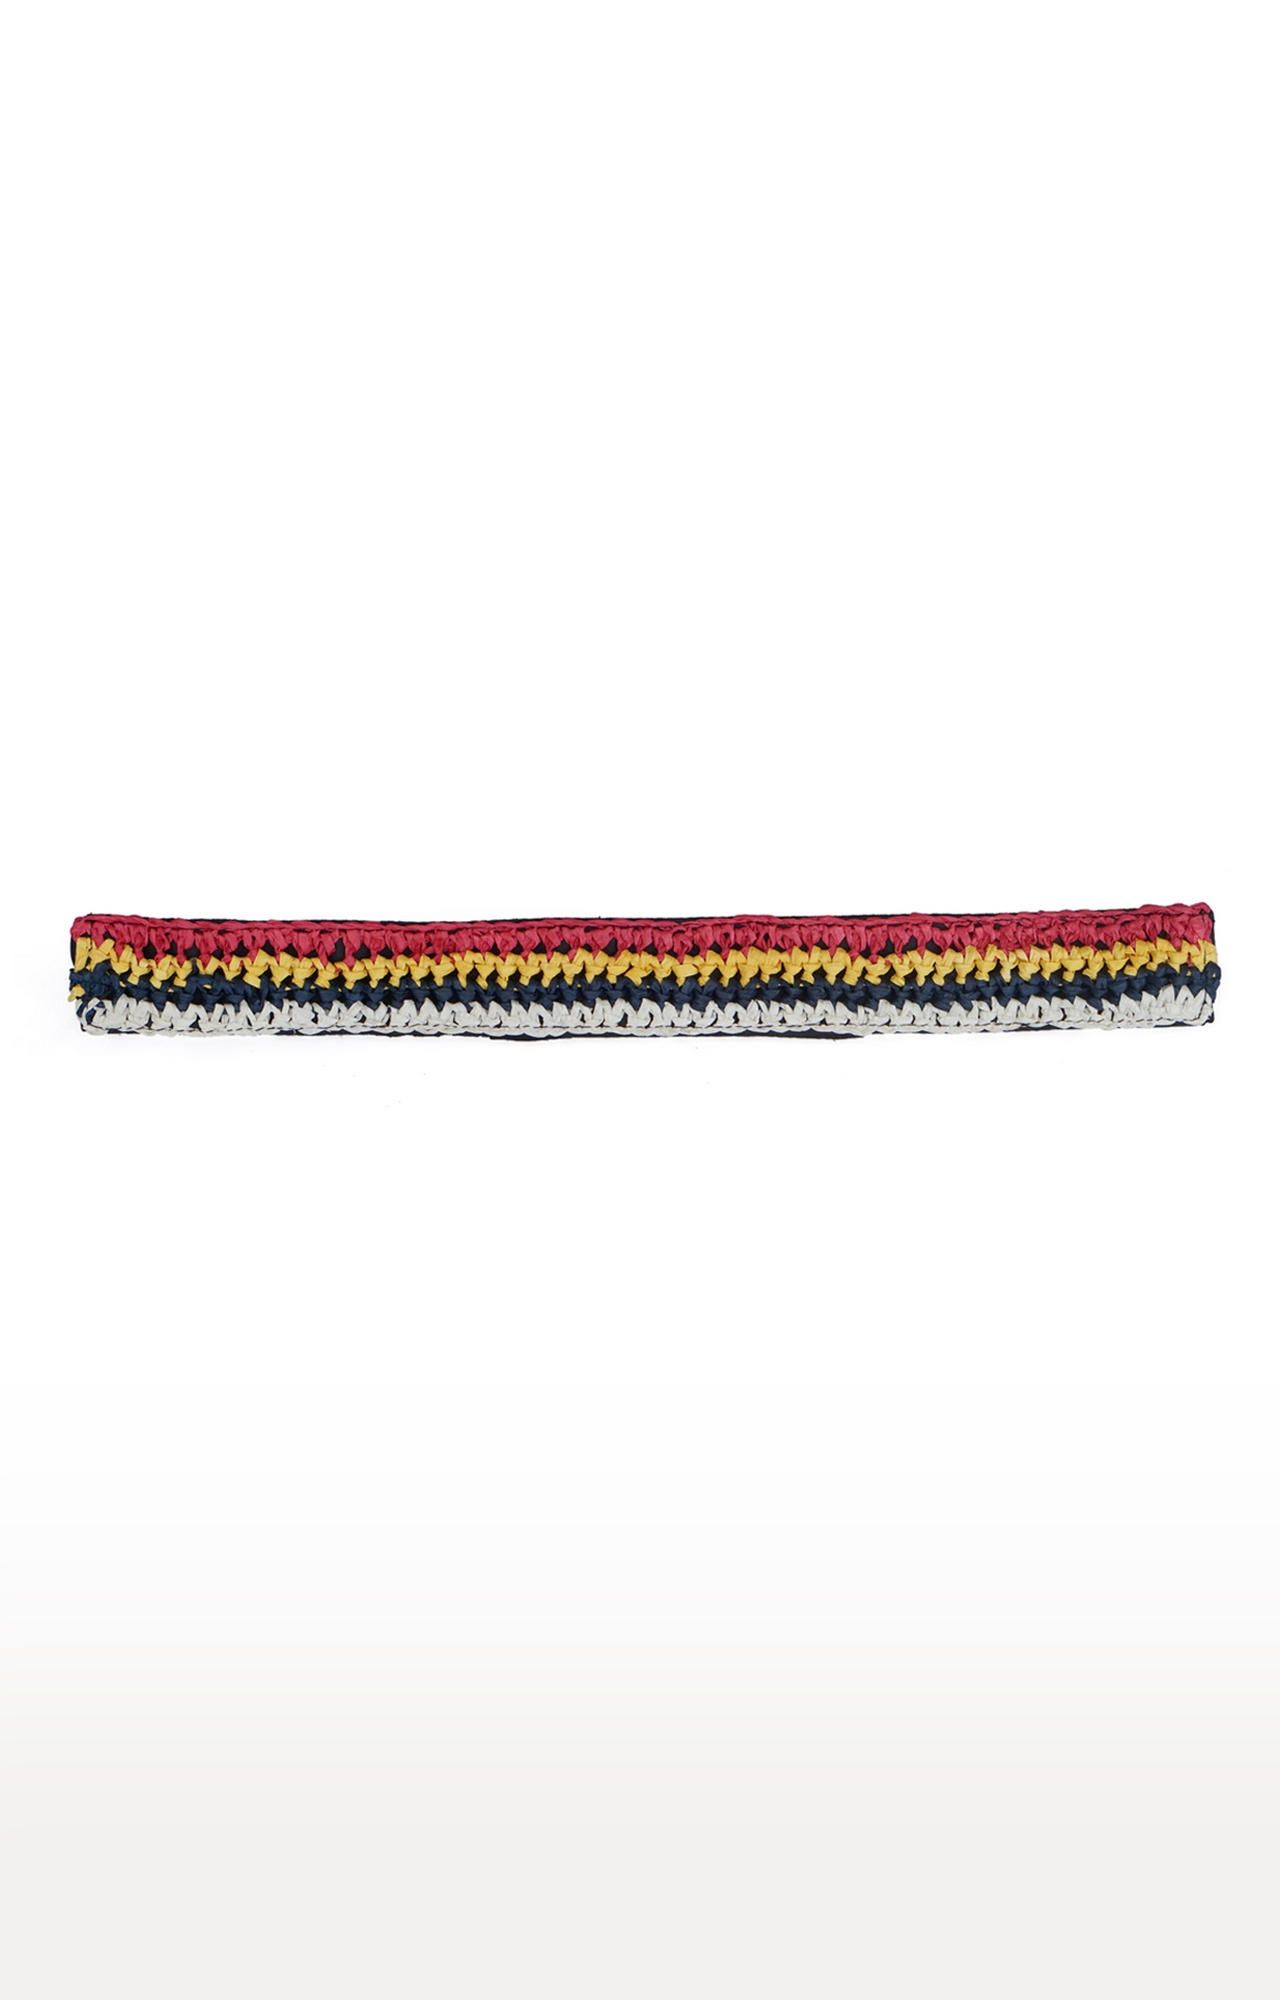 DIWAAH | Diwaah Multi-Coloured Casual Embroidered Belt 2